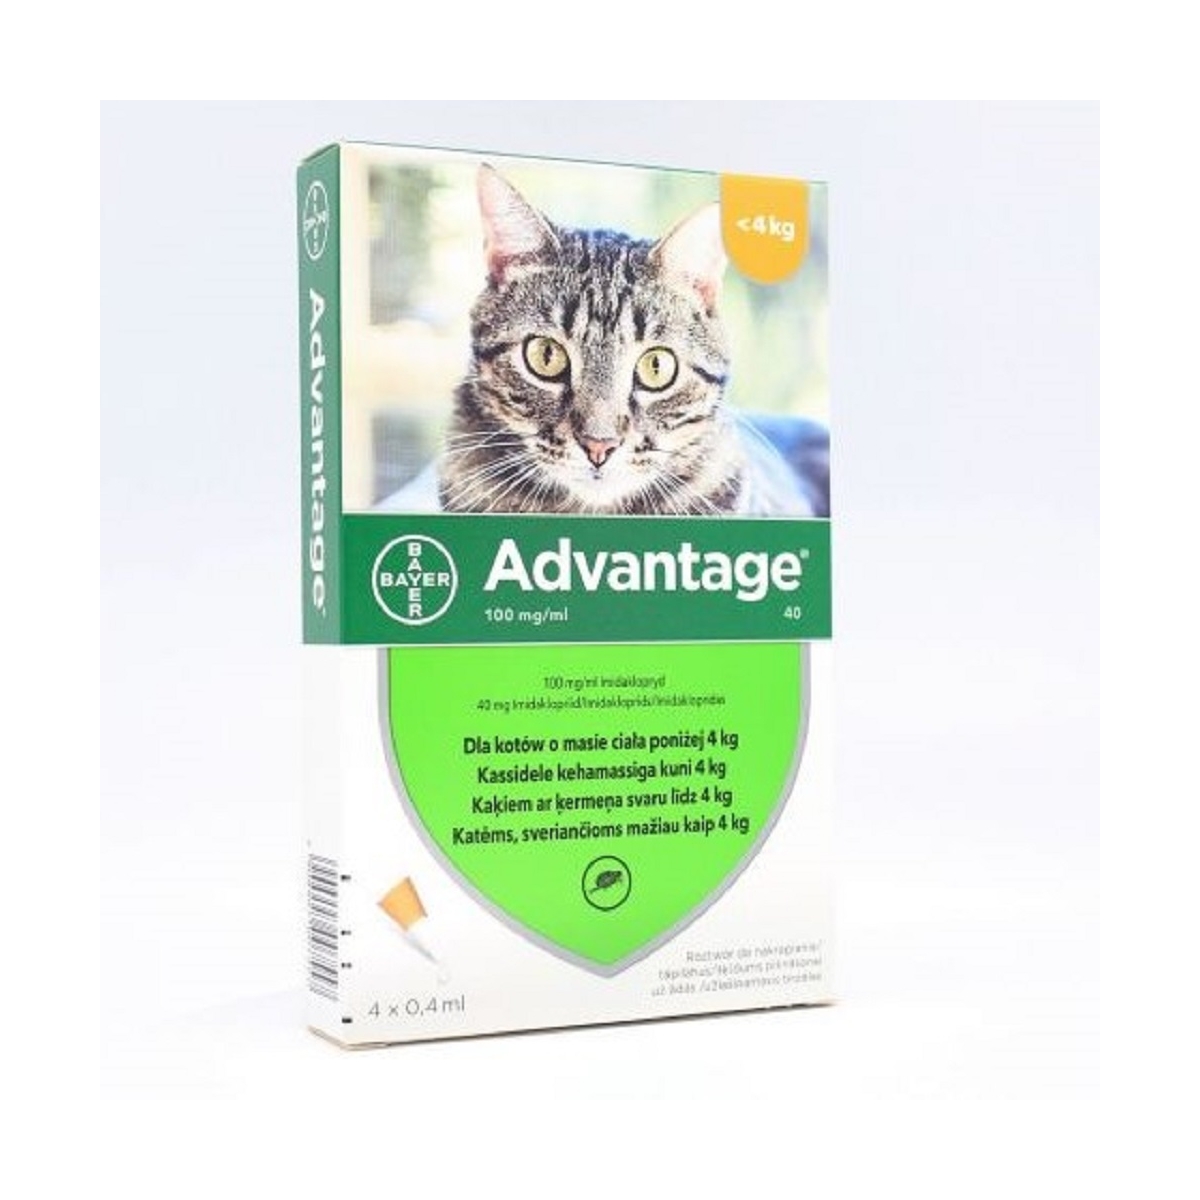 Advantage lašinamas antiparazitinis tirpalas katėms, 0,4ml, 1 vnt.